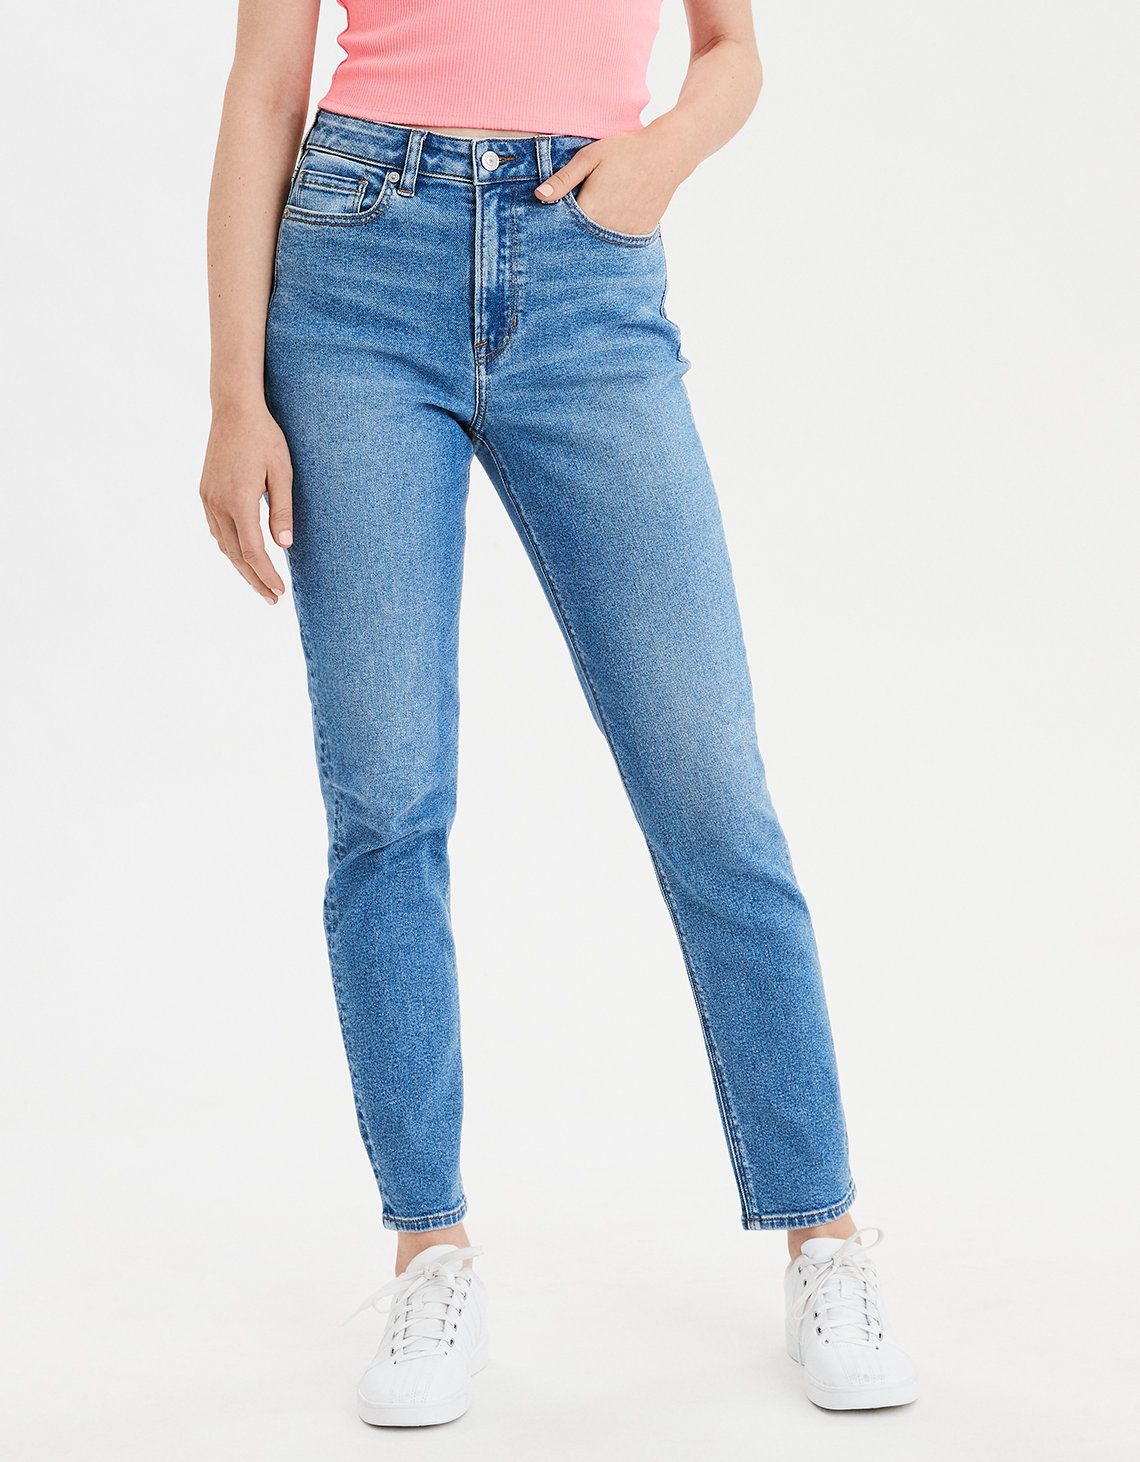 best looking jeans for ladies